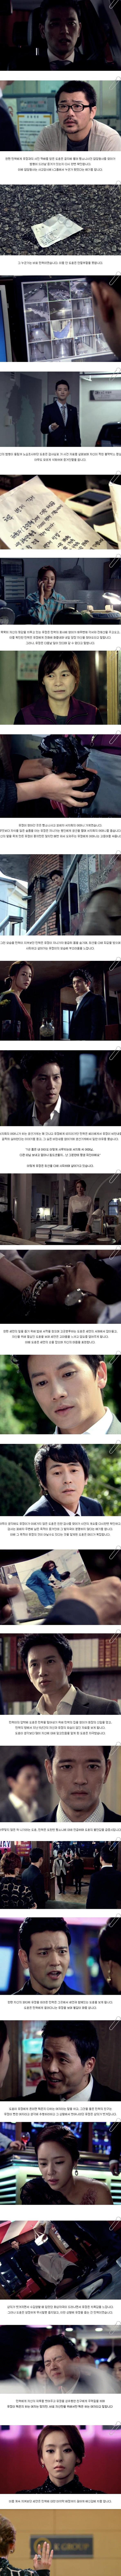 episode 8 captures for the Korean drama 'Secrets'